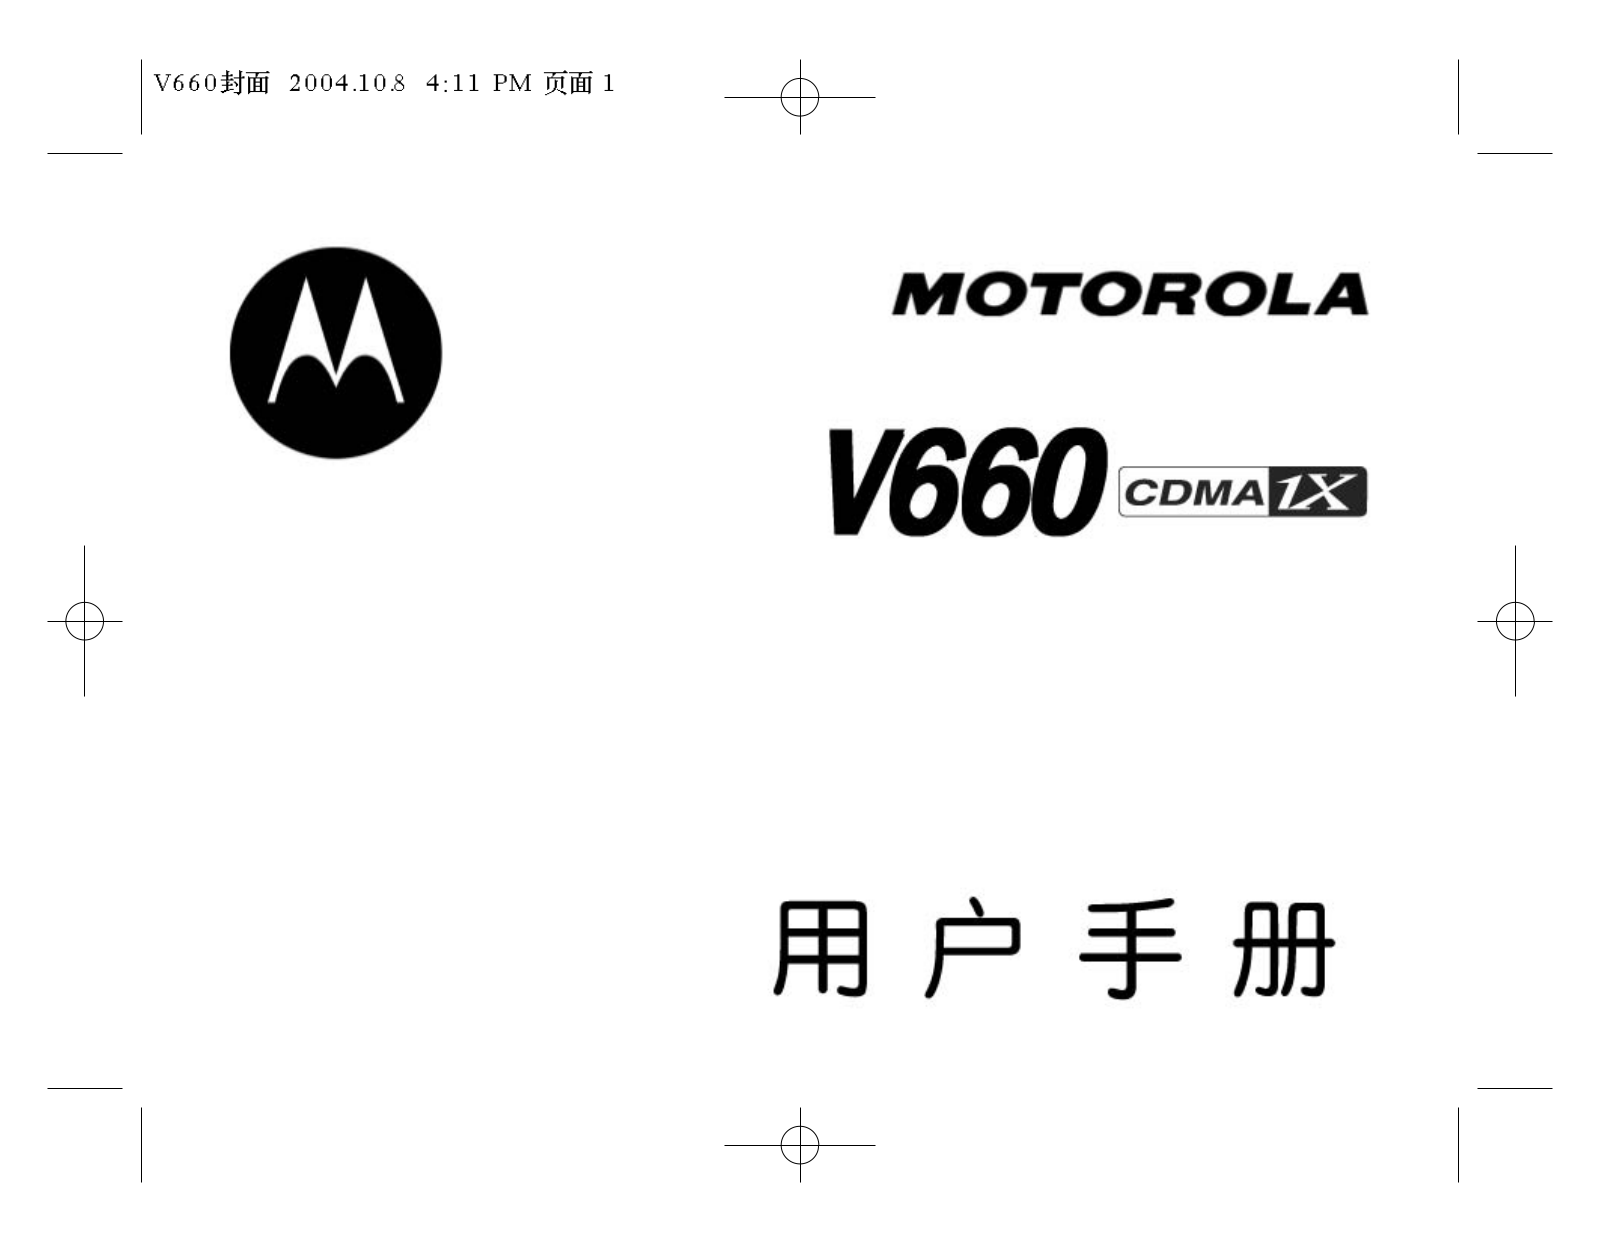 Motorola V660 Owner's Manual